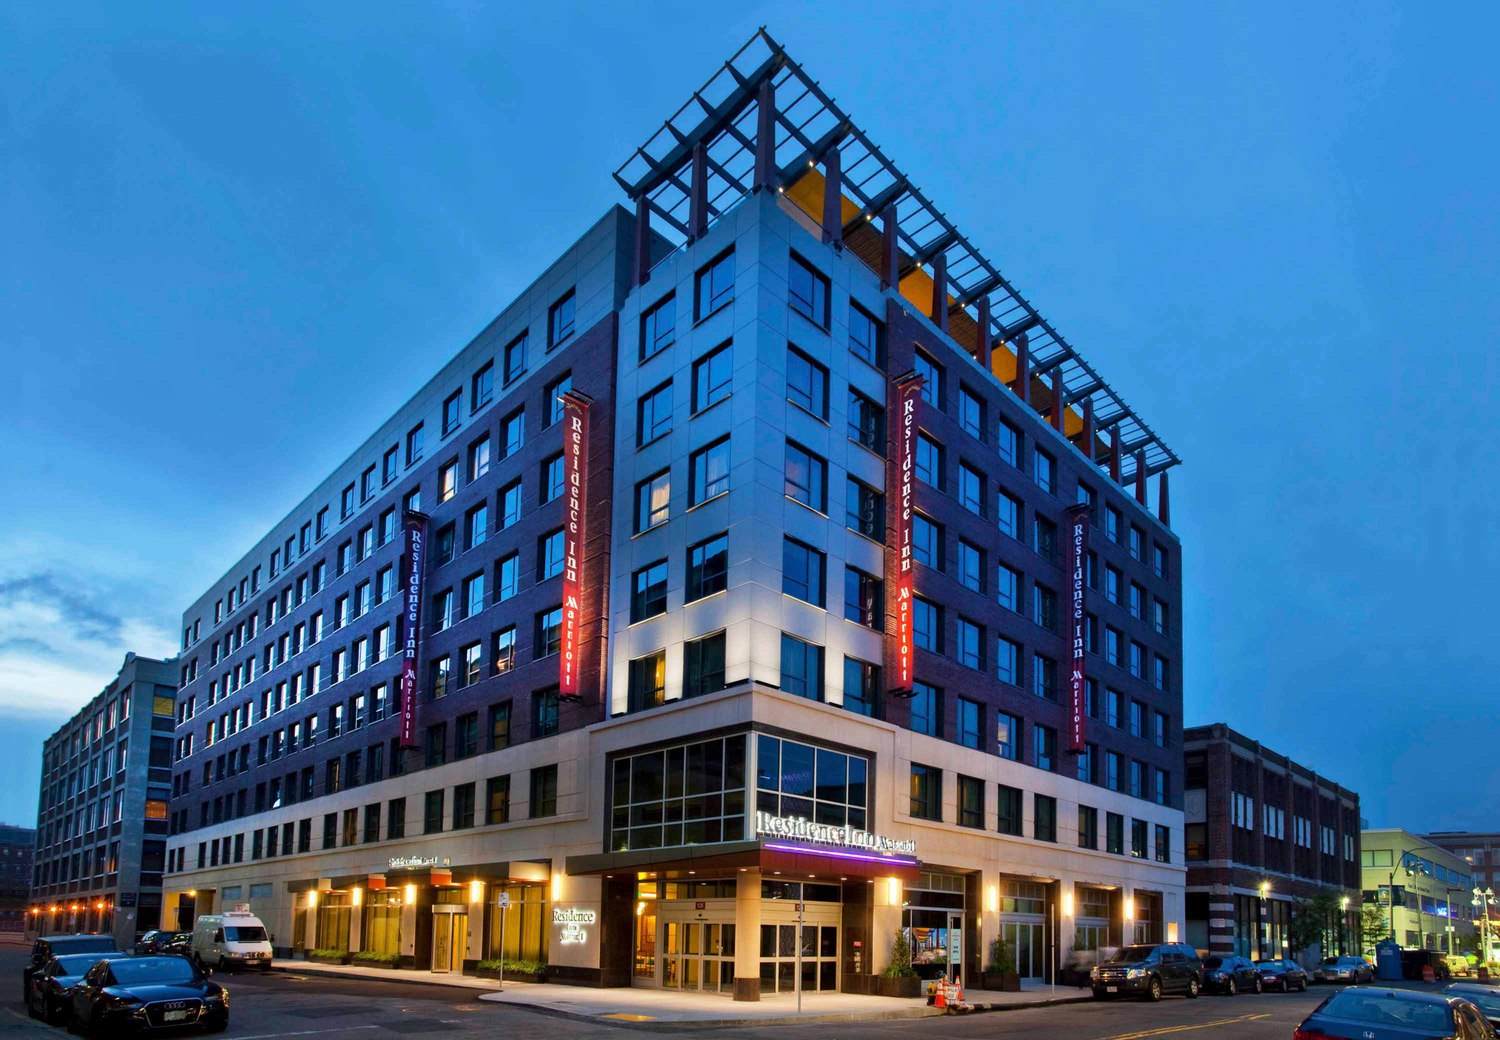 Residence Inn Boston Back Bay/Fenway, Boston, MA Jobs | Hospitality Online